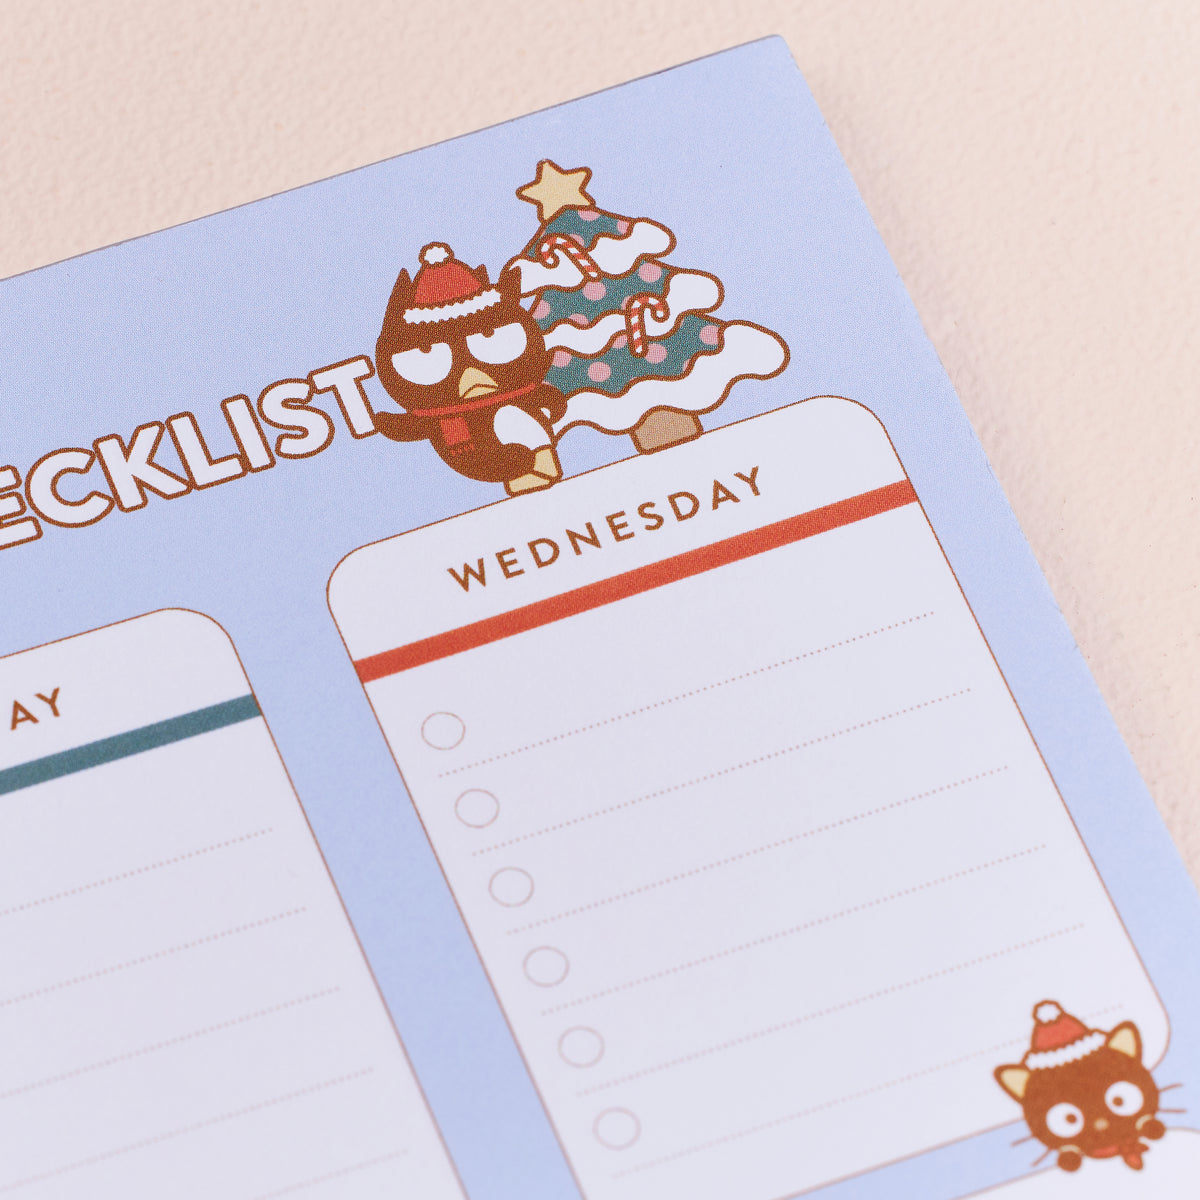 Hello Kitty and Friends x Erin Condren Holiday Checklist Notepad Stationery ERIN CONDREN   